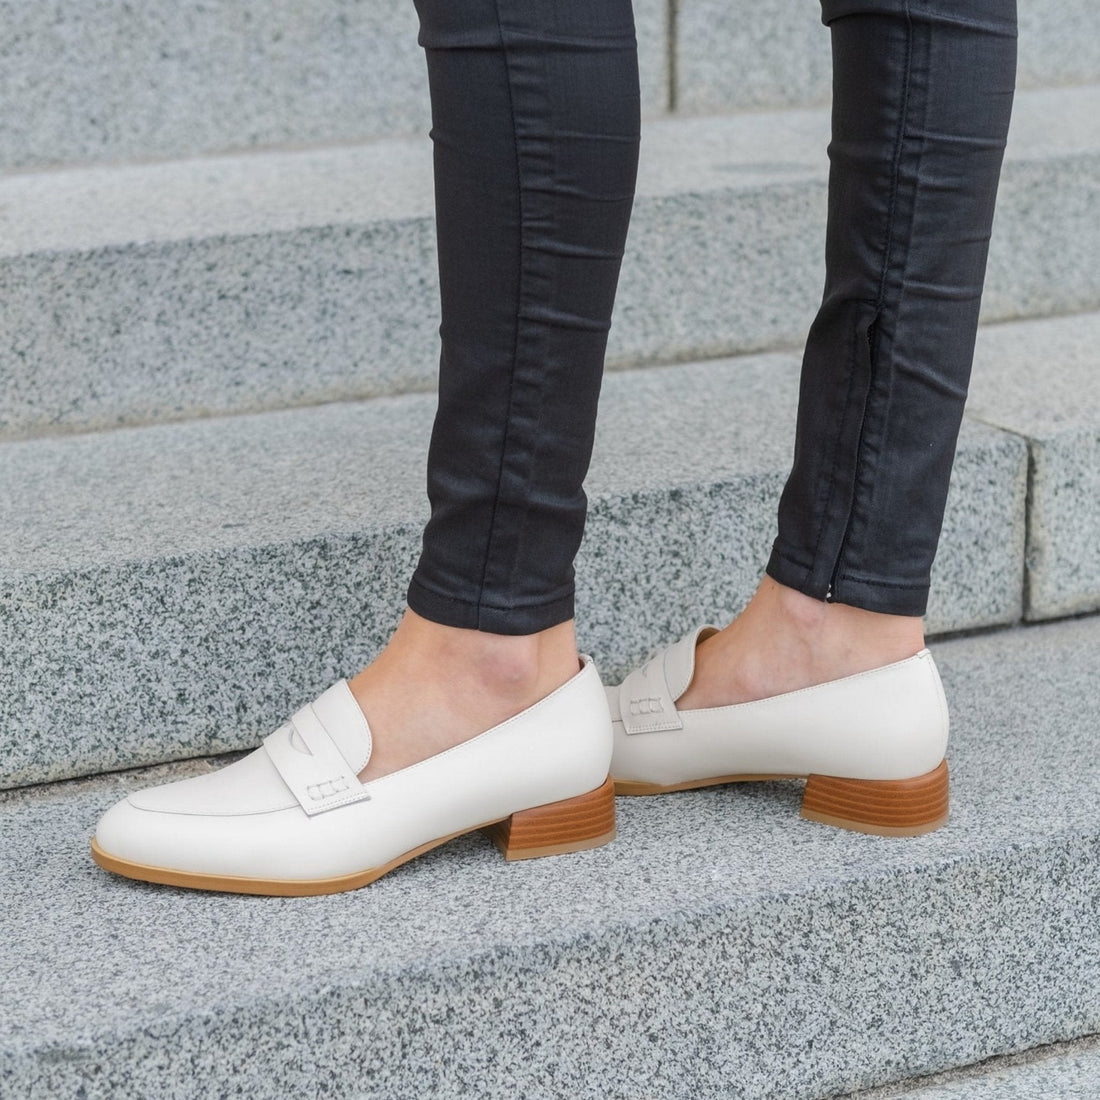 Stylish Flats for Everyday Elegance | Sole Shoes